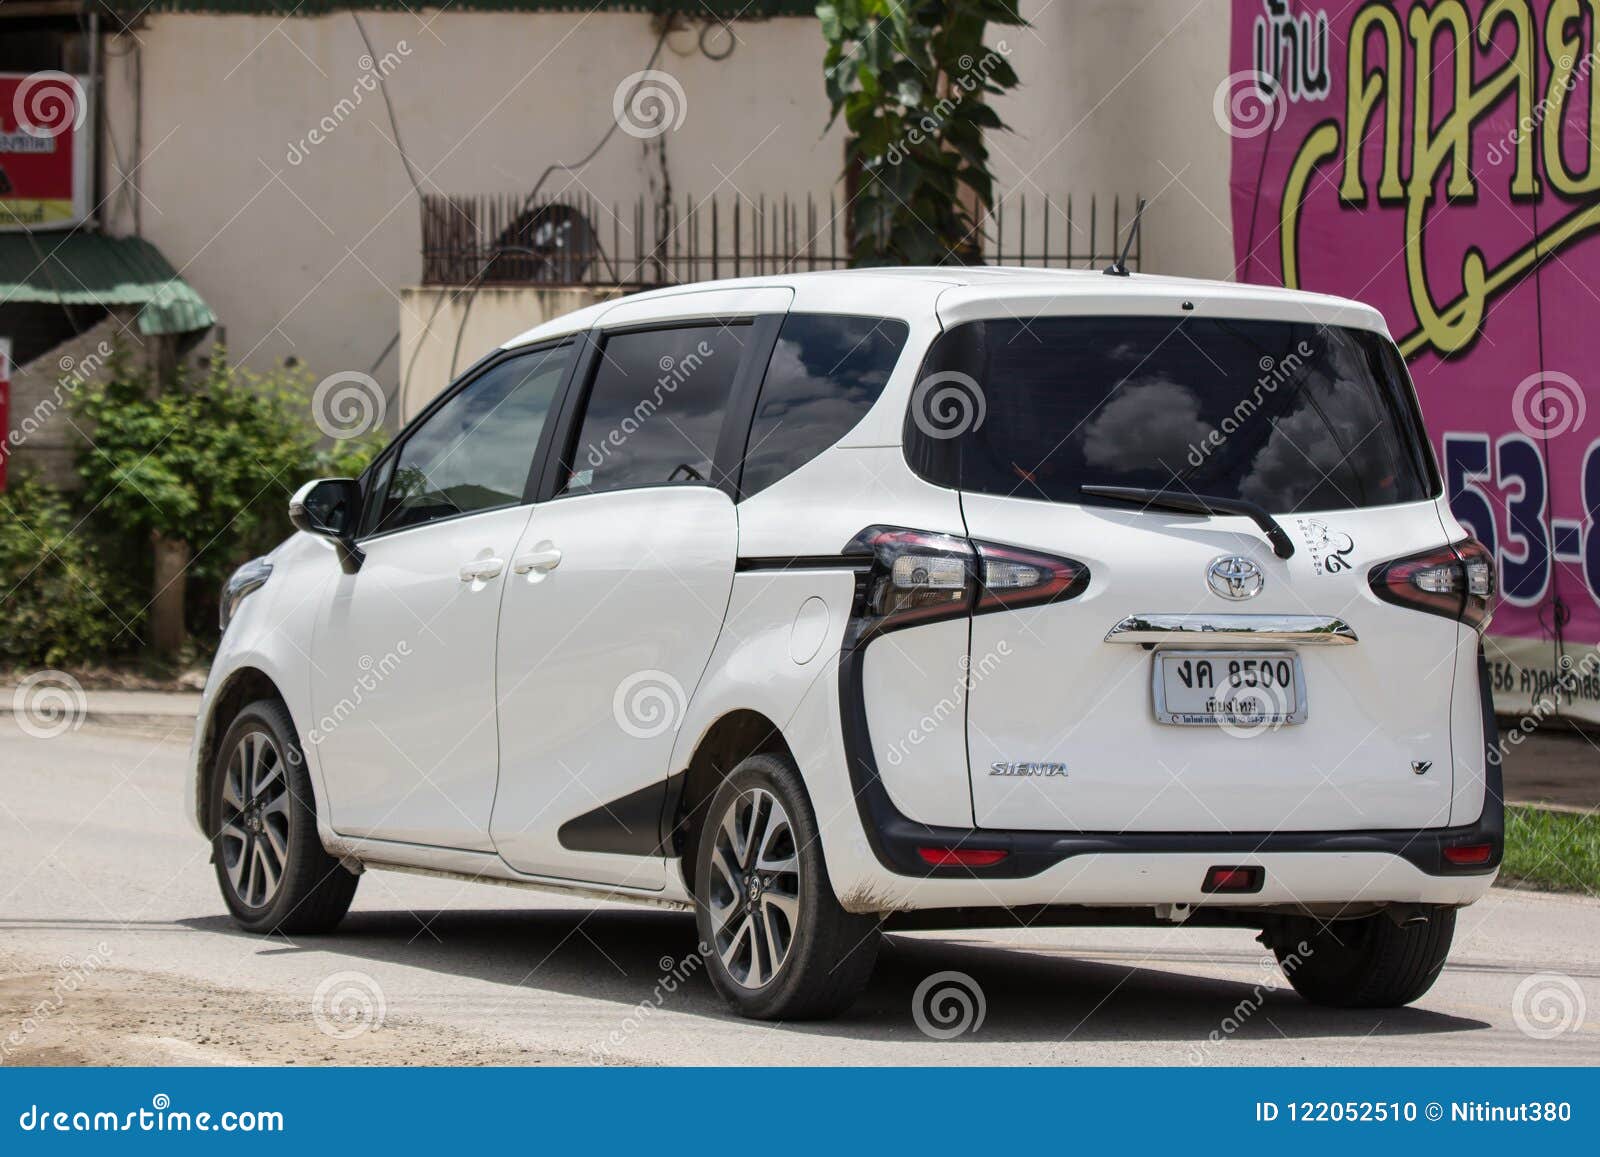 Toyota Sienta Mini Mpv Van Editorial Image Image Of Modern